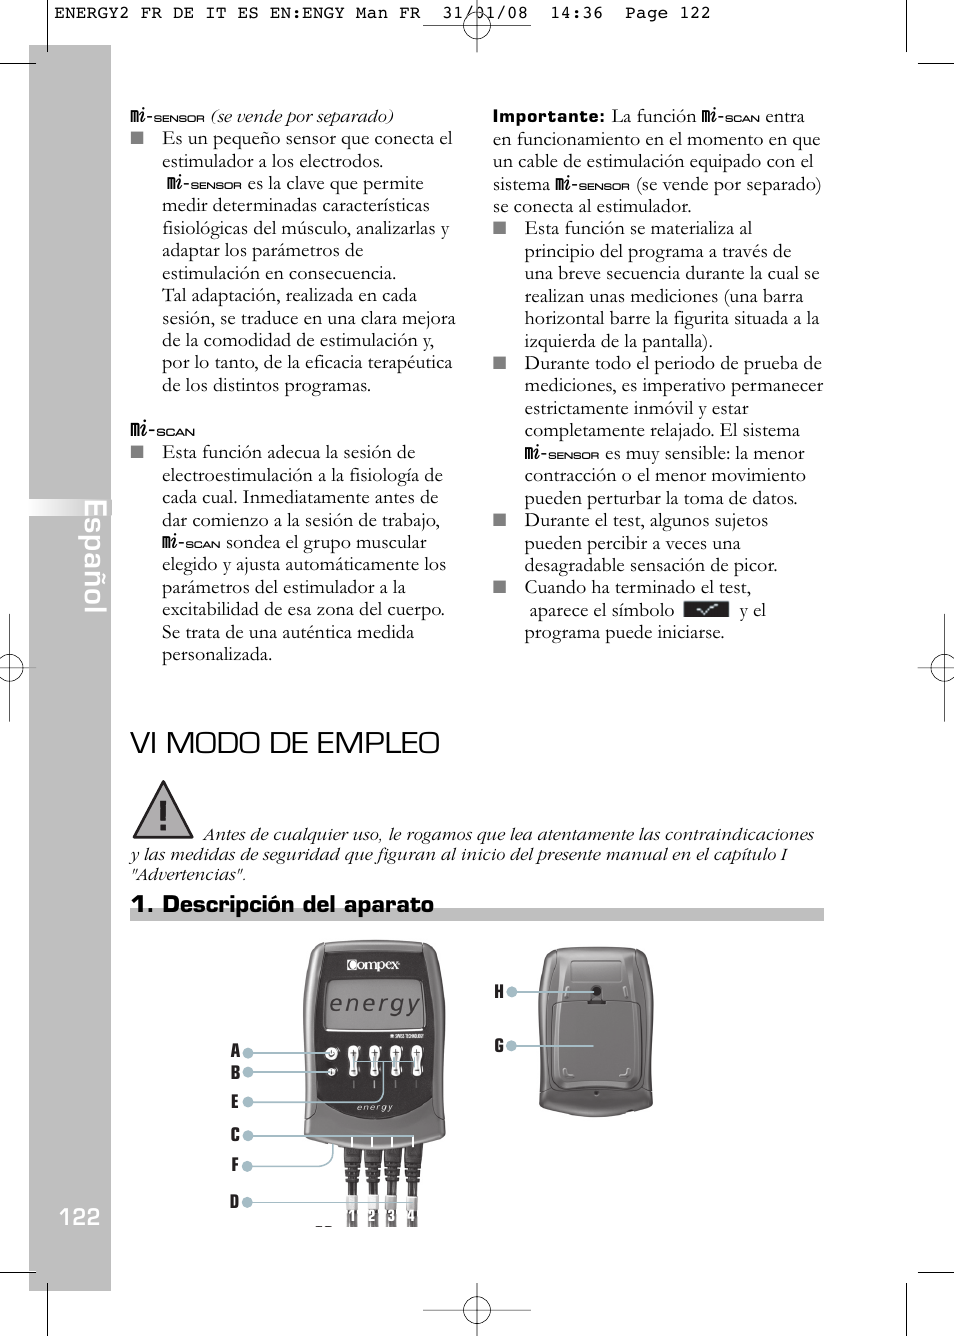 Vi modo de empleo, Español | Compex Energy mi-Ready User Manual | Page 124  / 183 | Original mode